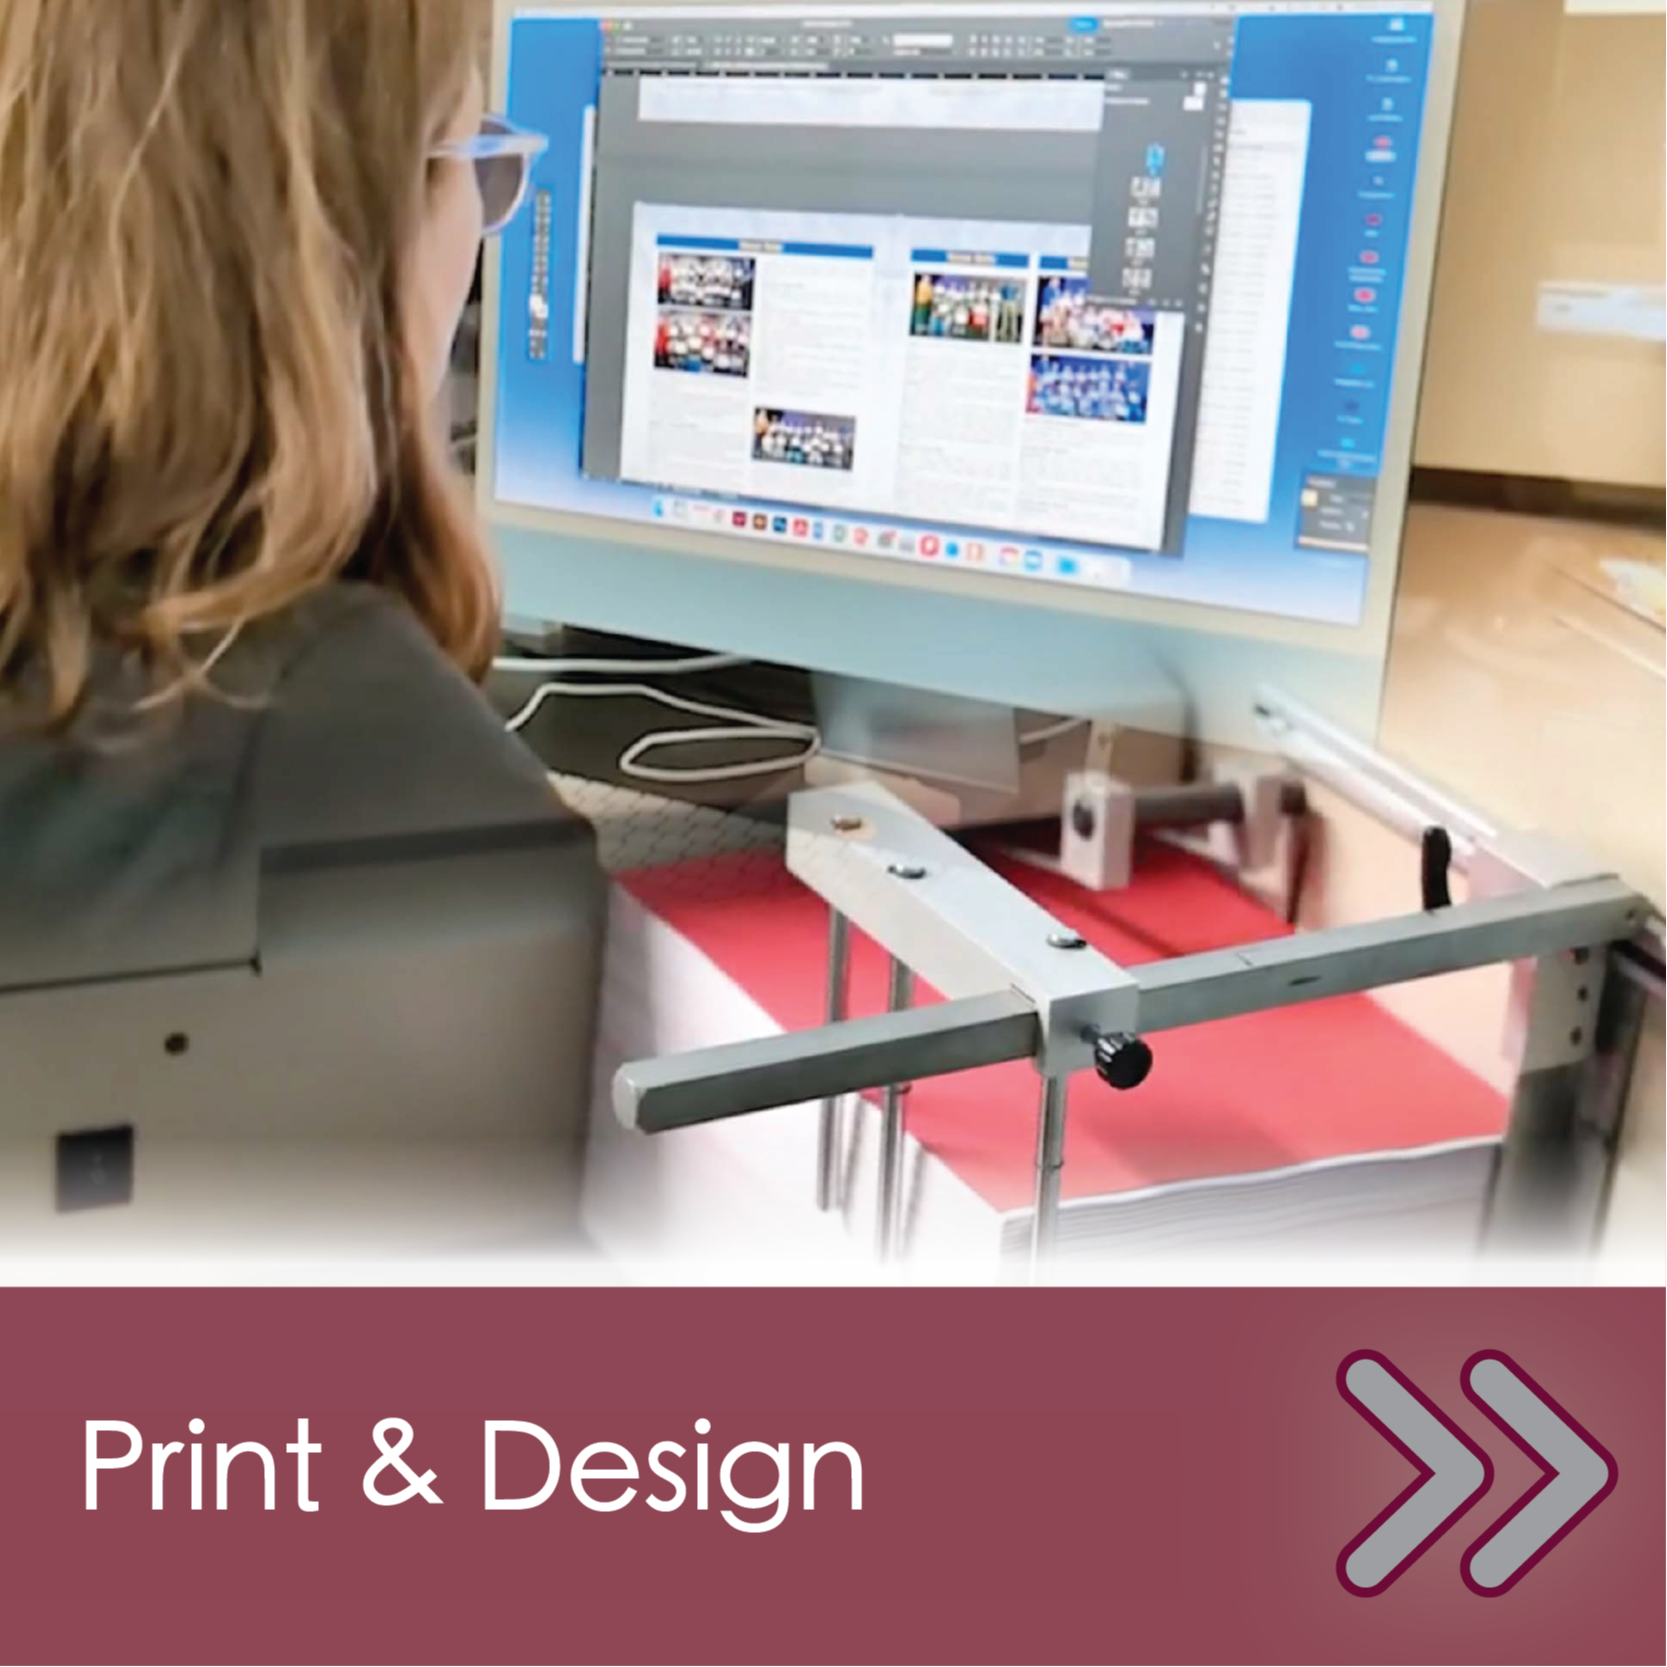 DCMO BOCES Print & Design Service